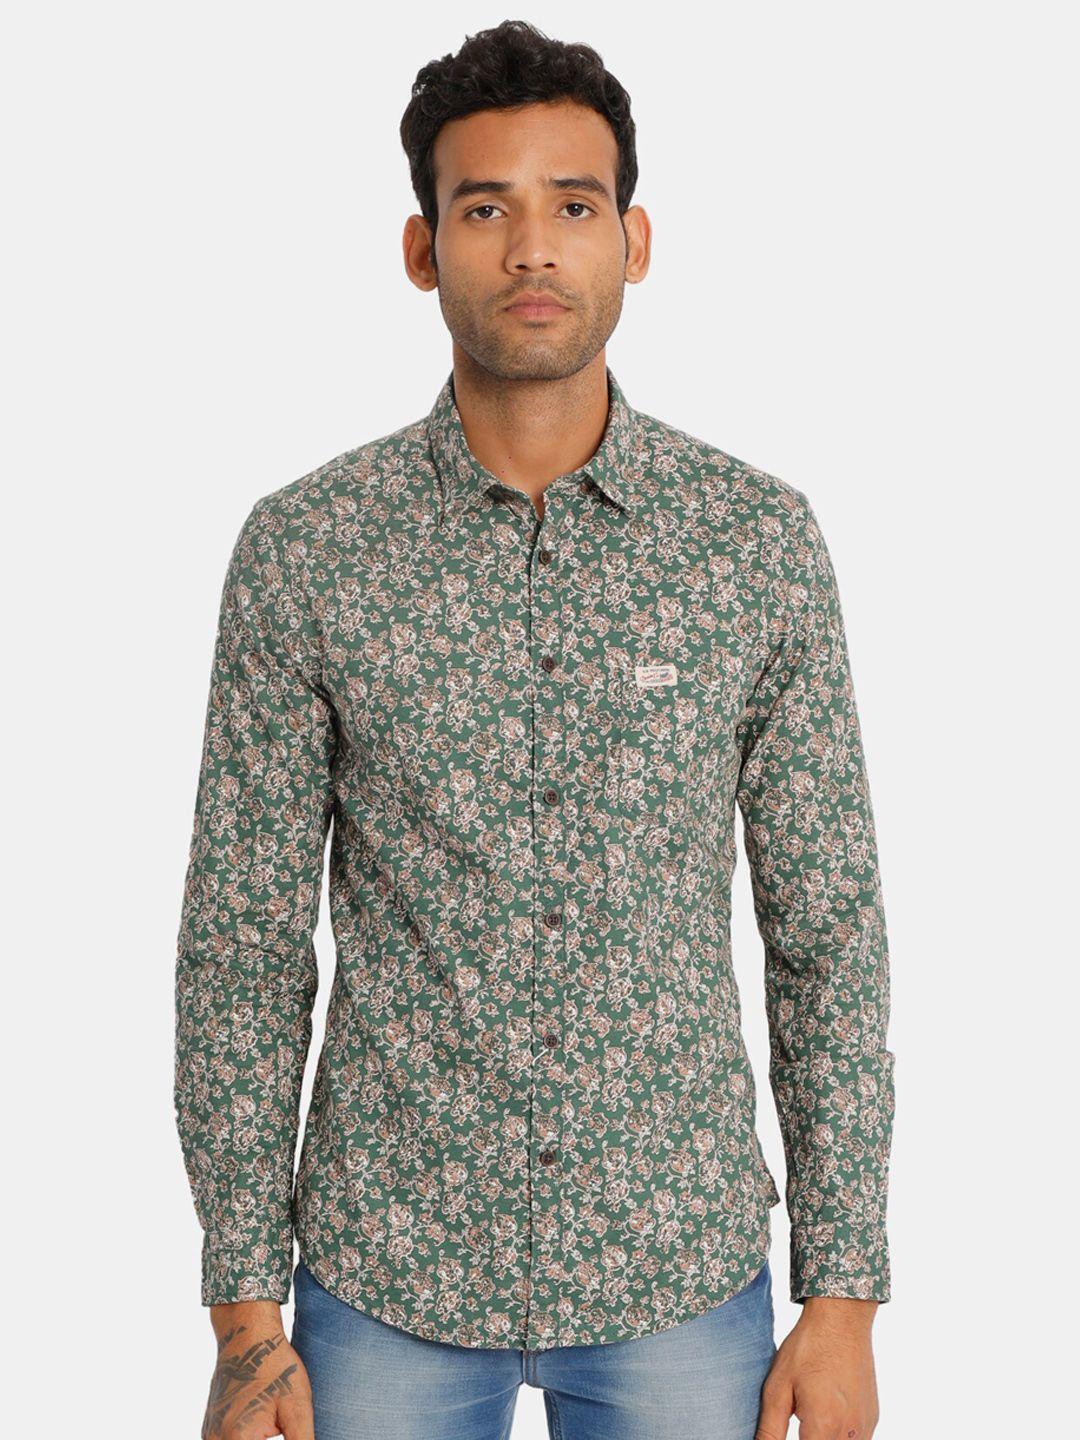 u.s. polo assn. denim co. men green & brown regular fit printed cotton casual shirt